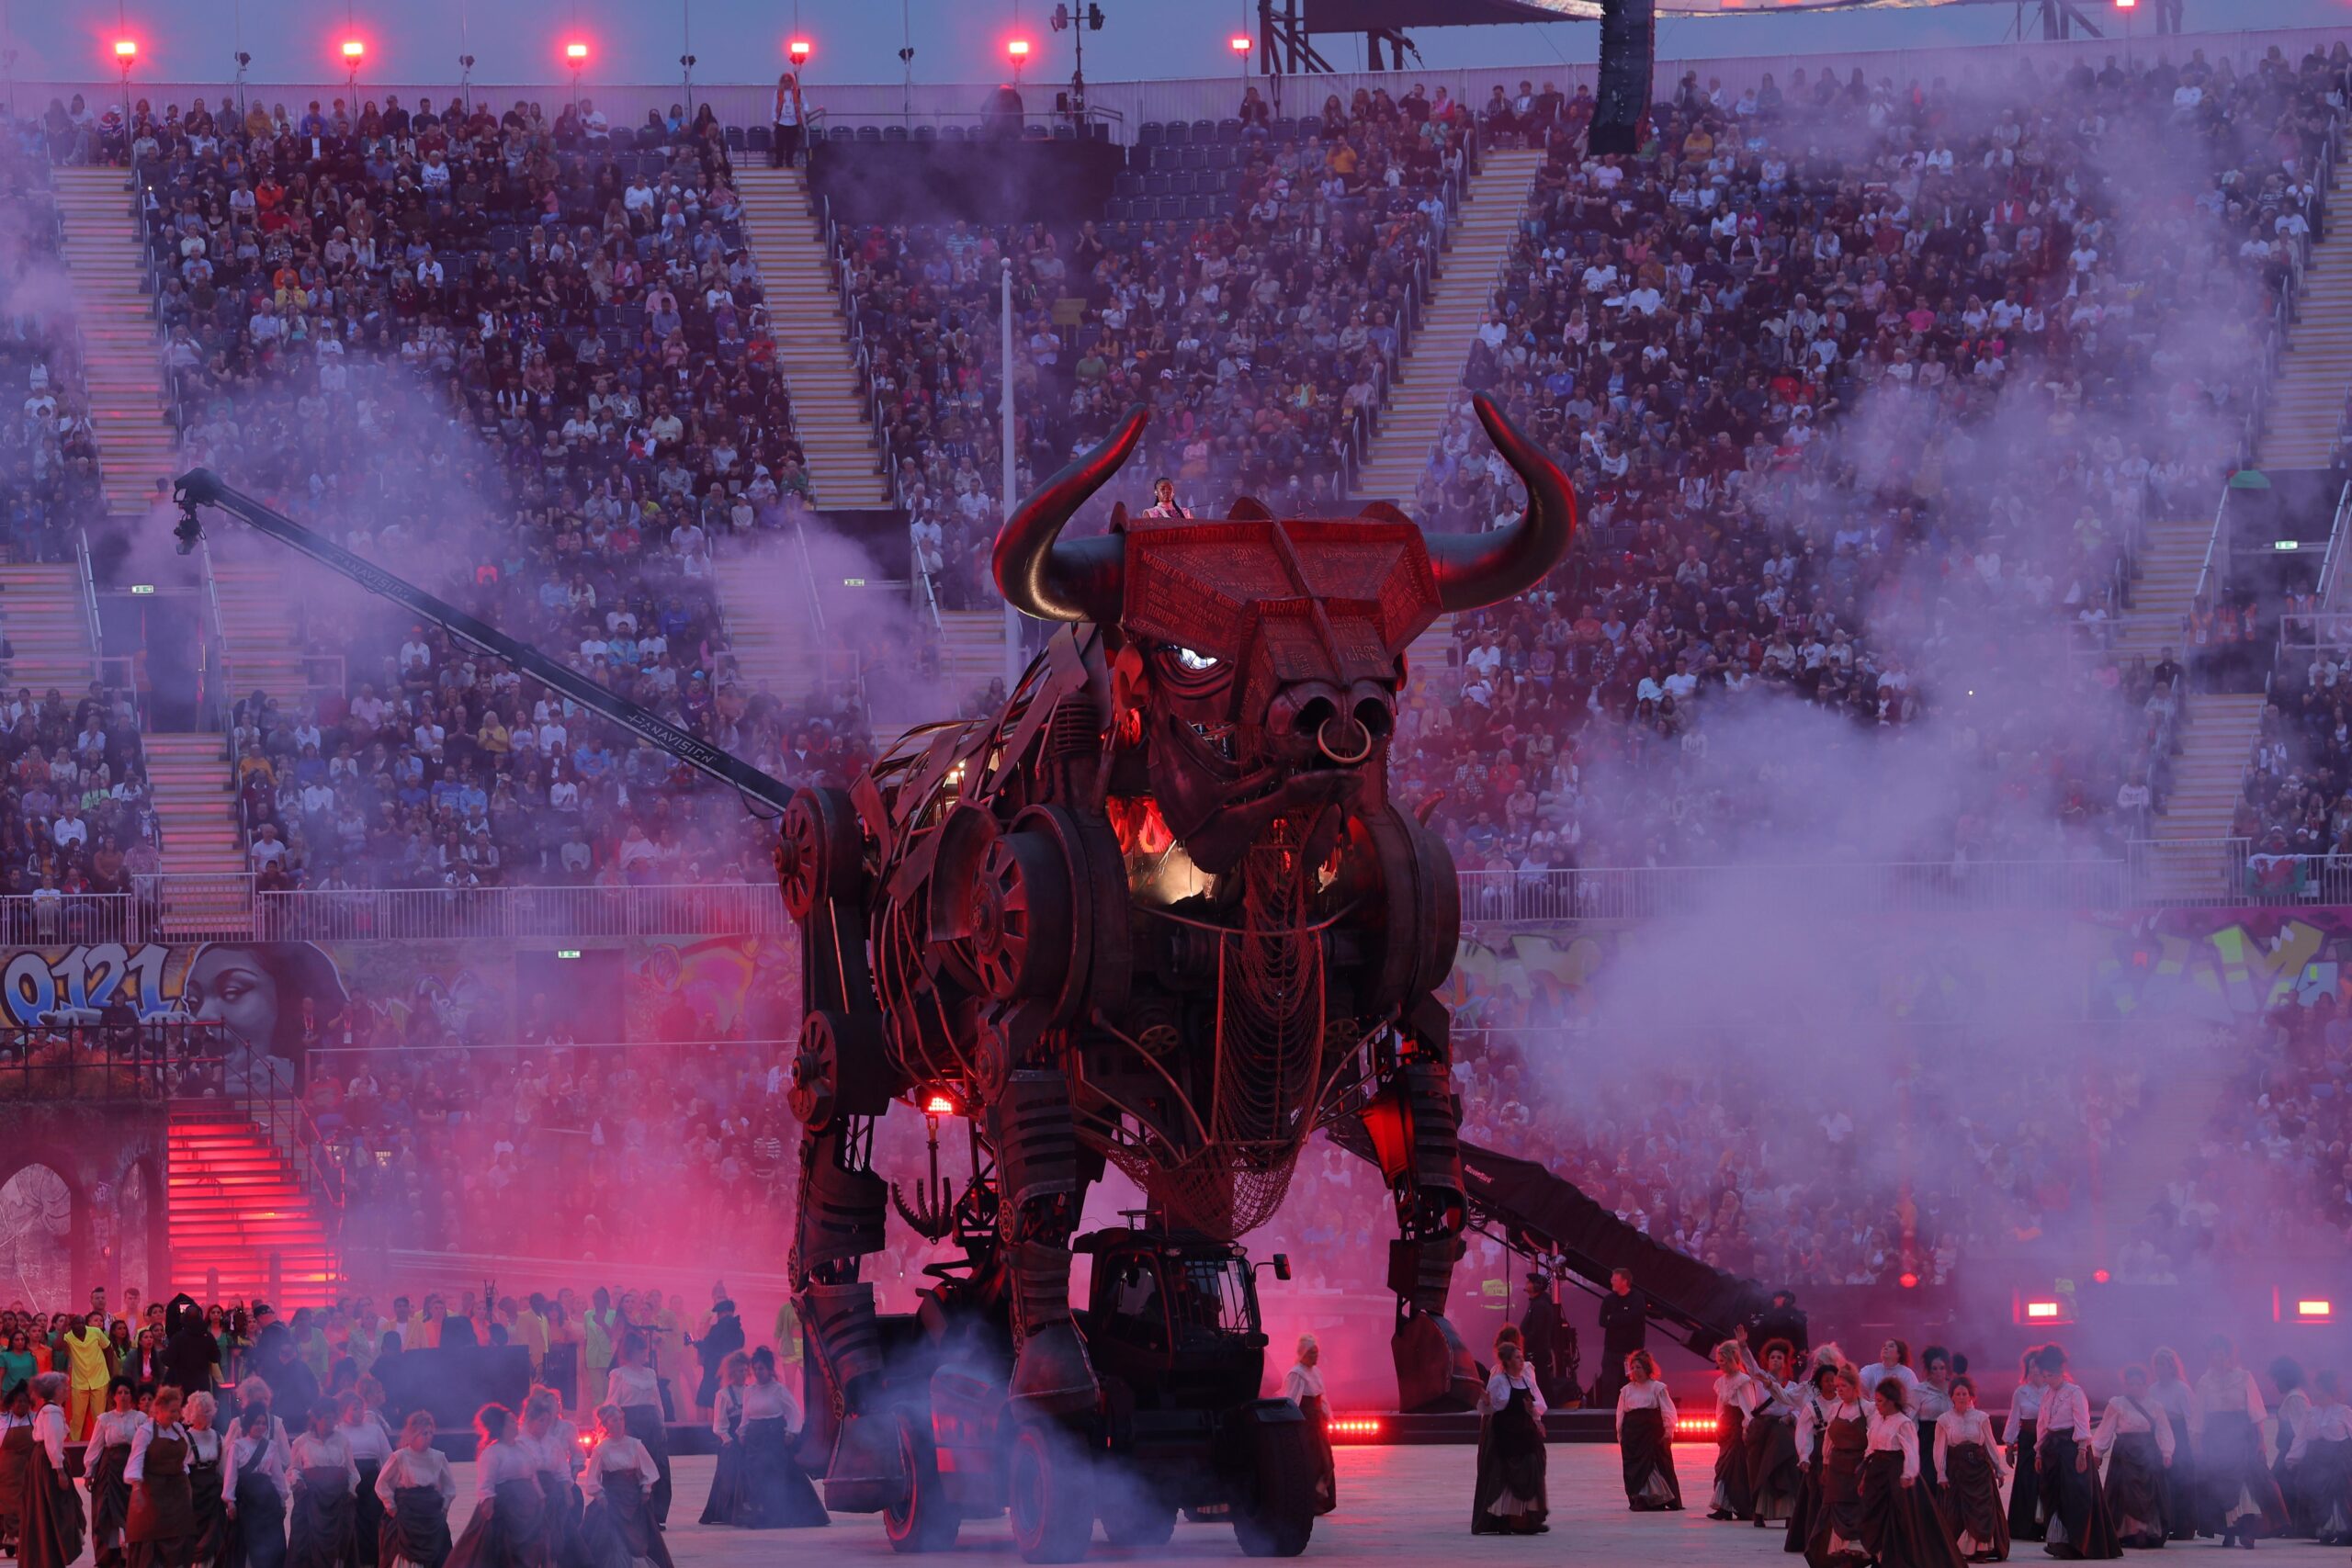 A Giant Mechanical Bull